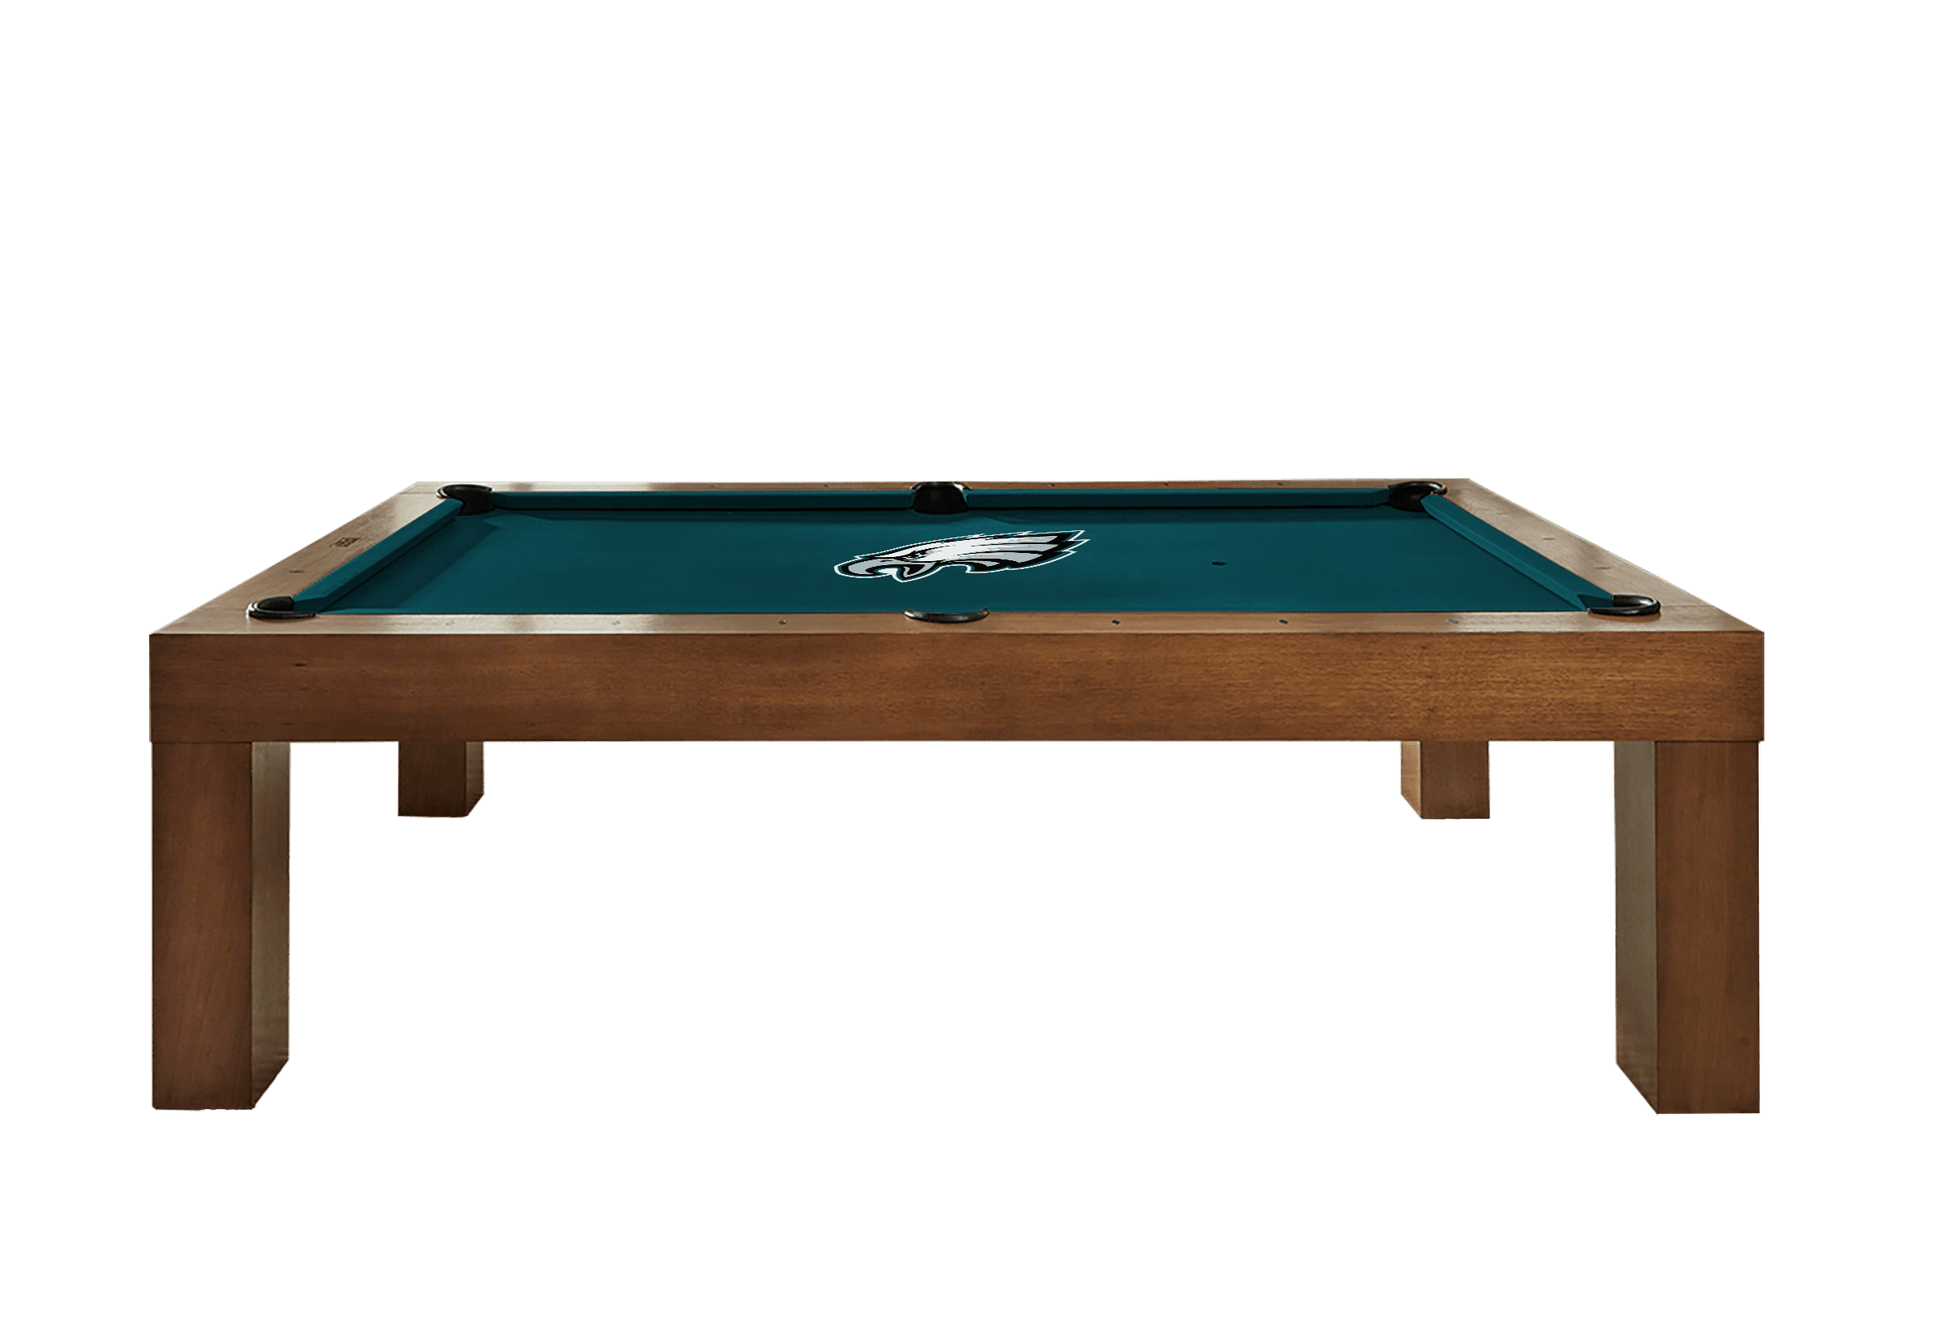 Philadelphia Eagles Premium Pool Table Bundle - Walnut Pool Bundle Home Arcade Games   